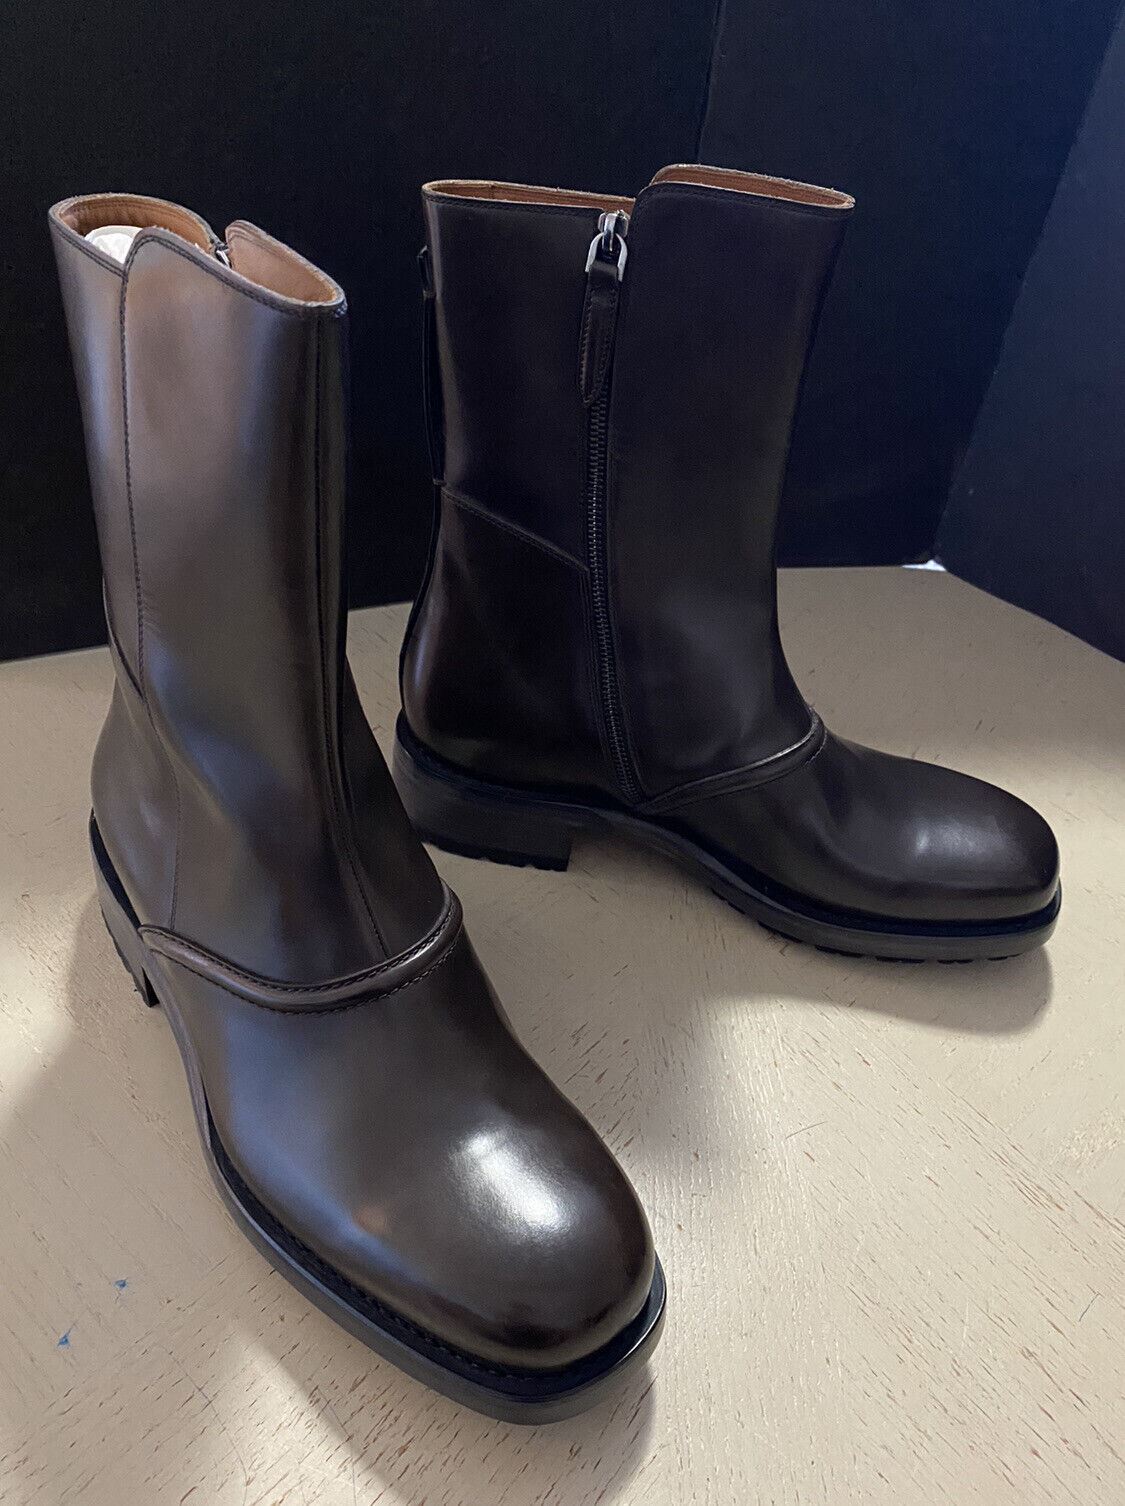 New $1595 Ermenegildo Zegna Couture Calfskin Leather Boots Shoes DK Brown 10 US